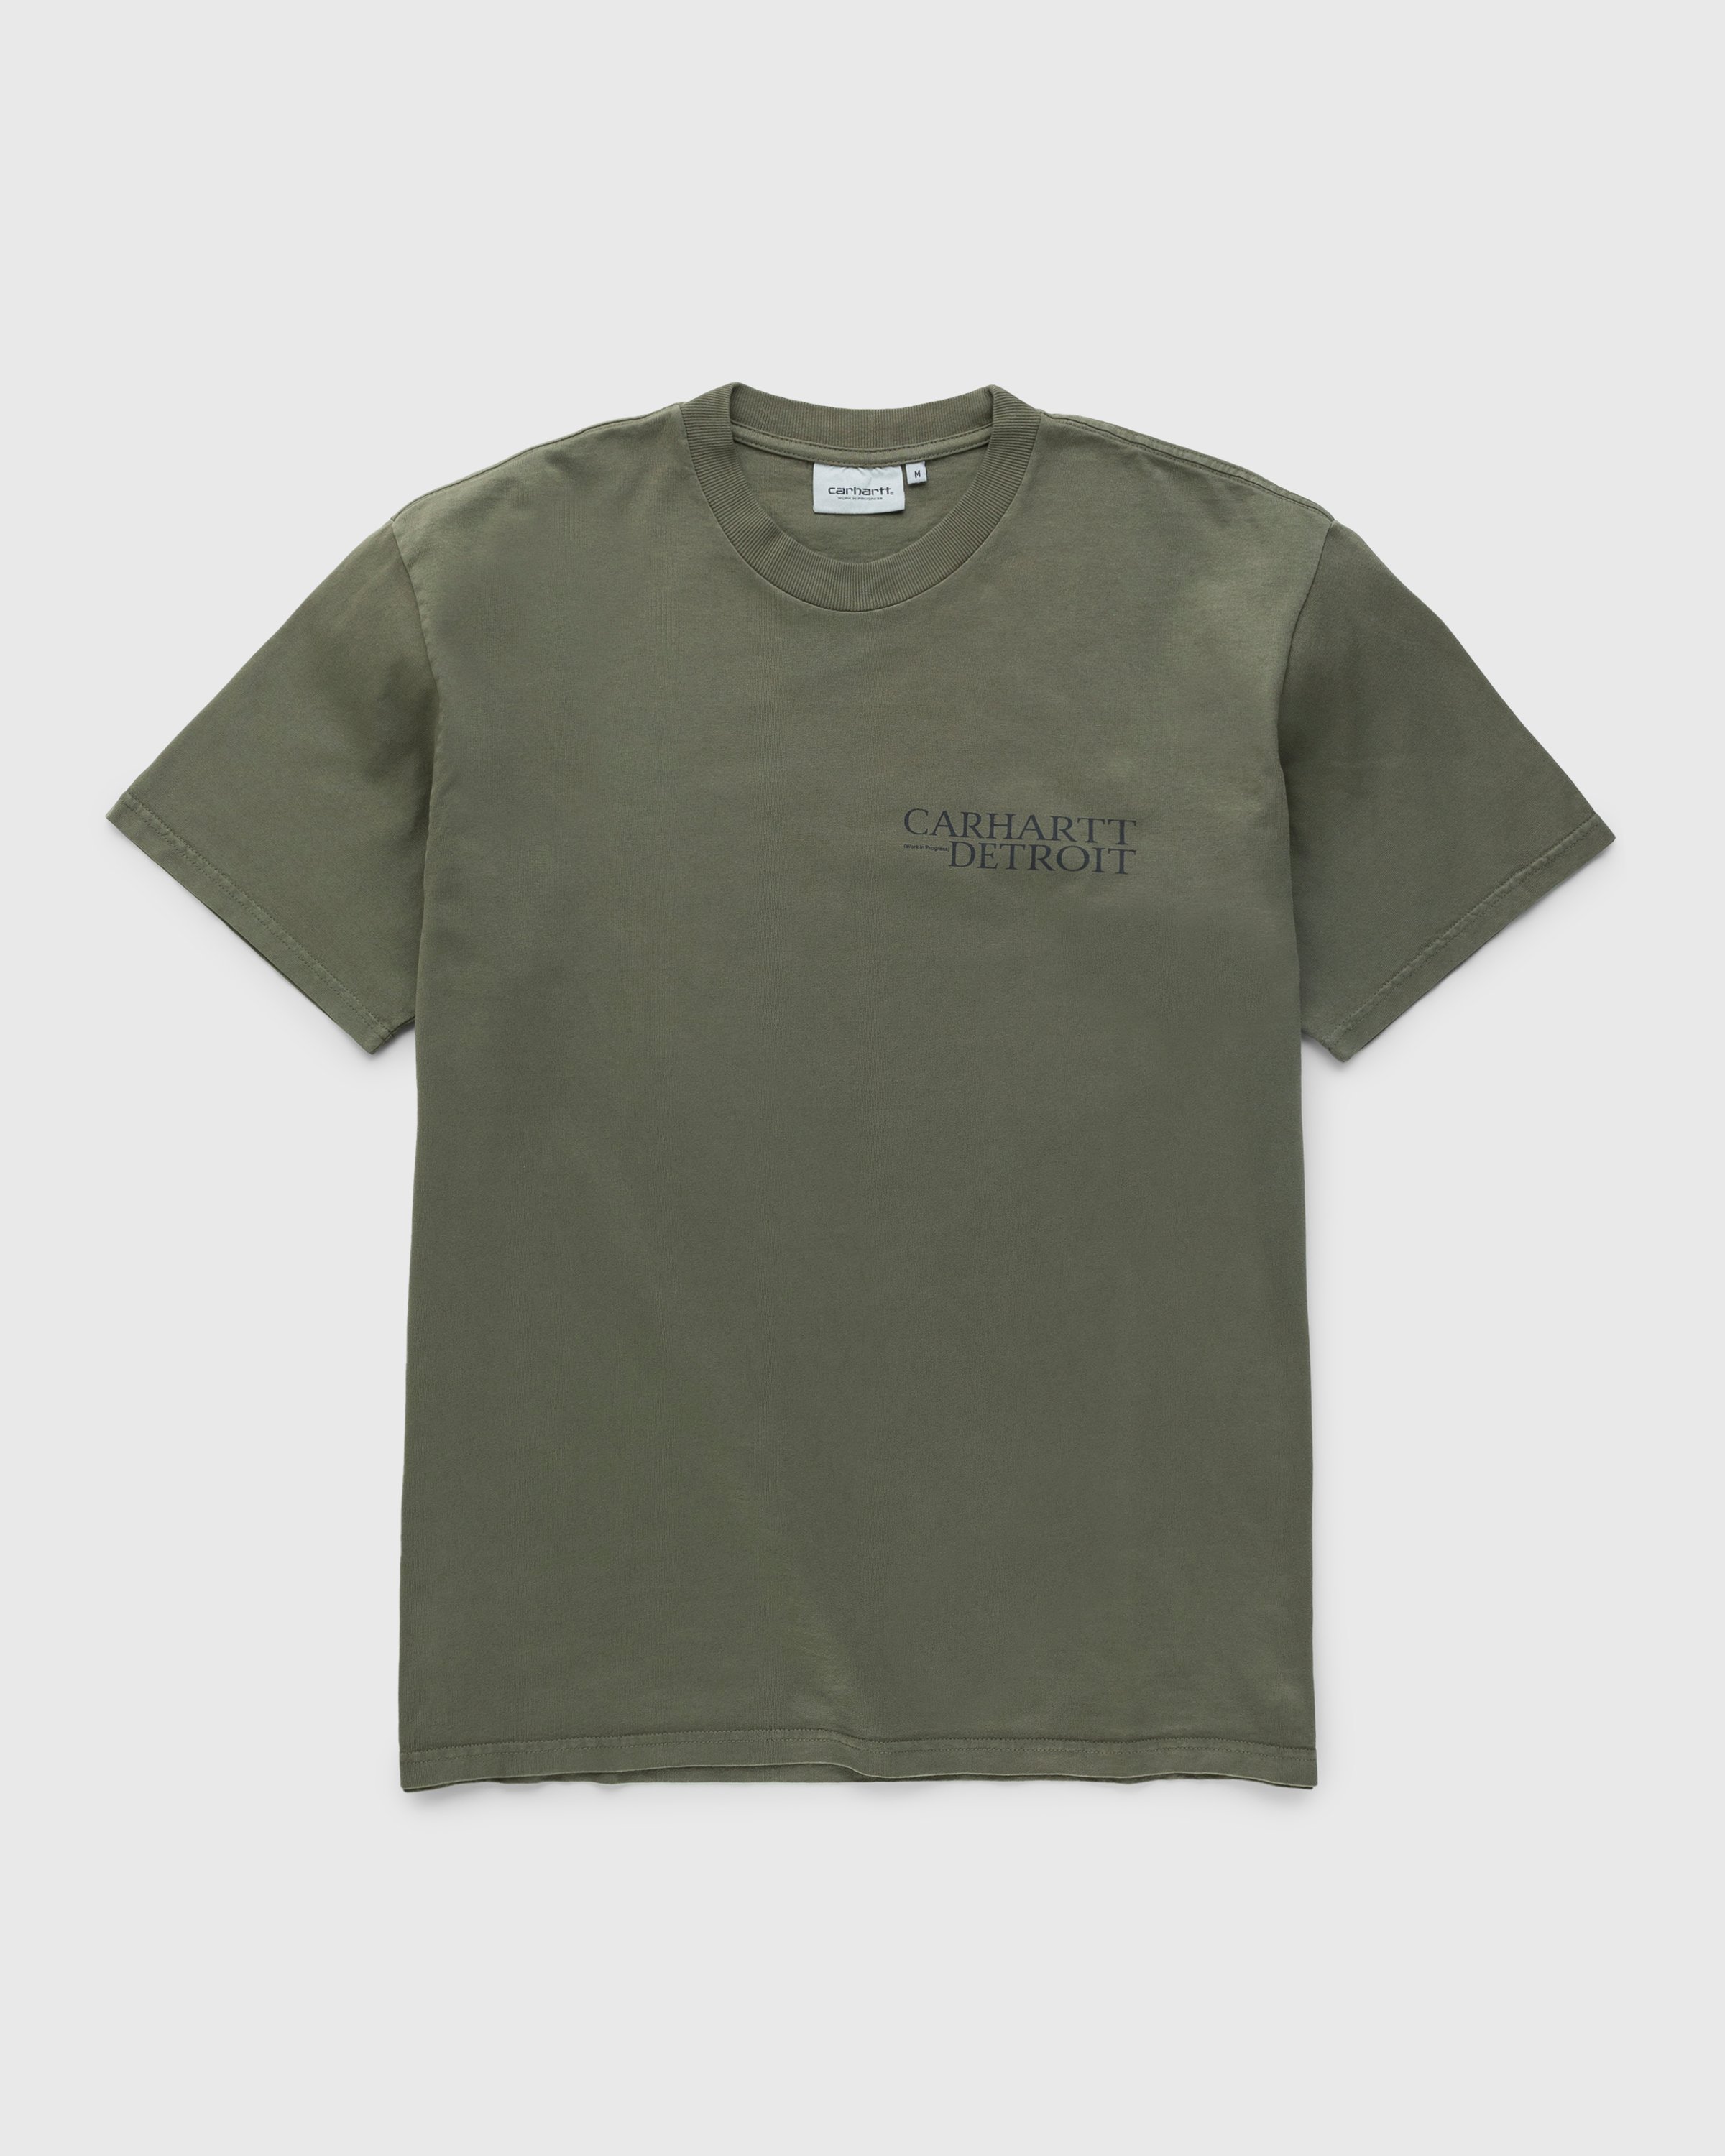 Carhartt WIP - Undisputed T-Shirt Seaweed - Clothing - Green - Image 1